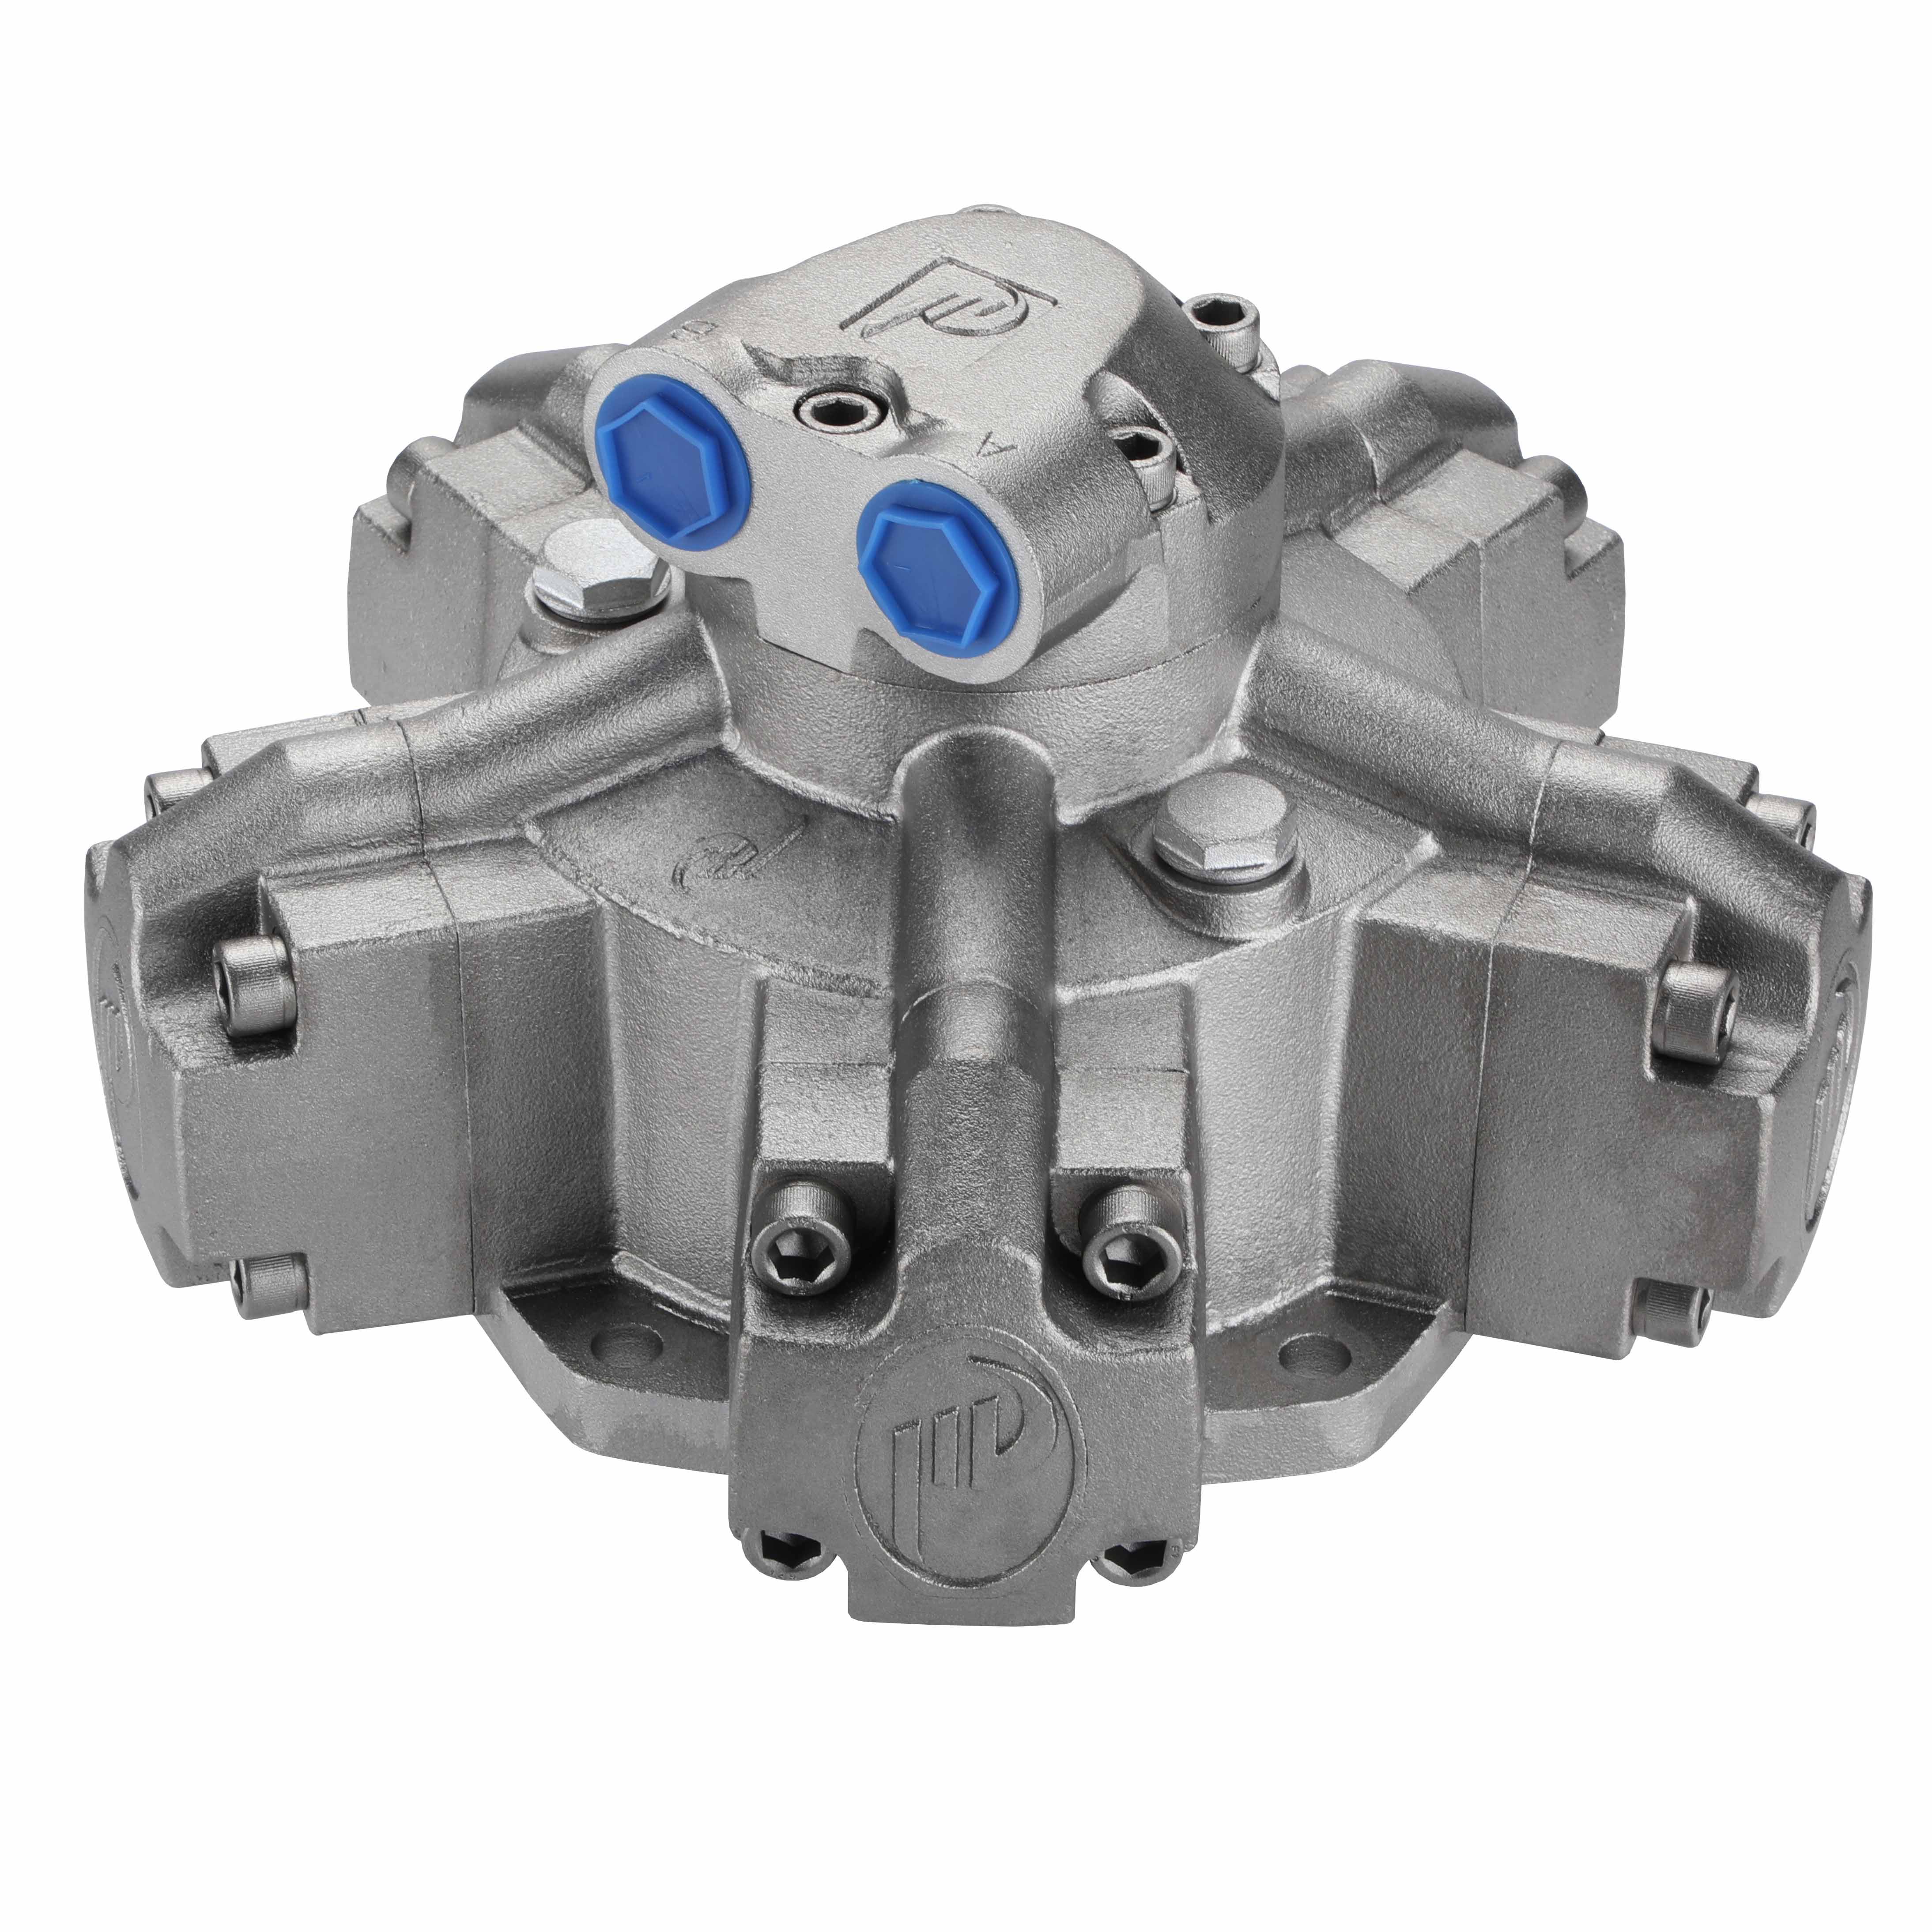 Hydraulic Motor IPM Series Featured Image